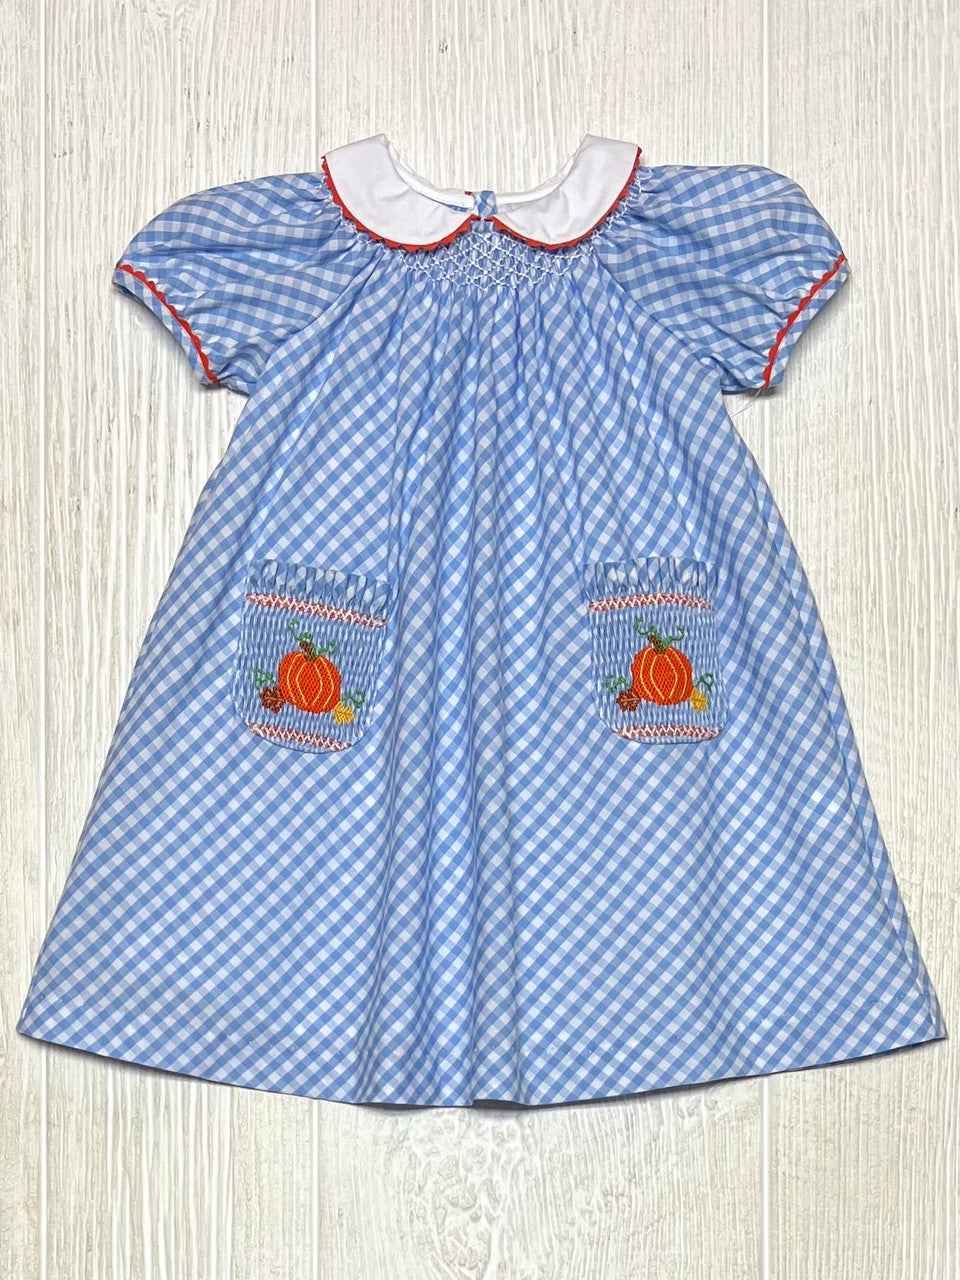 Blue Gingham Short Sleeve Dress with Pumpkin Smocked Pockets